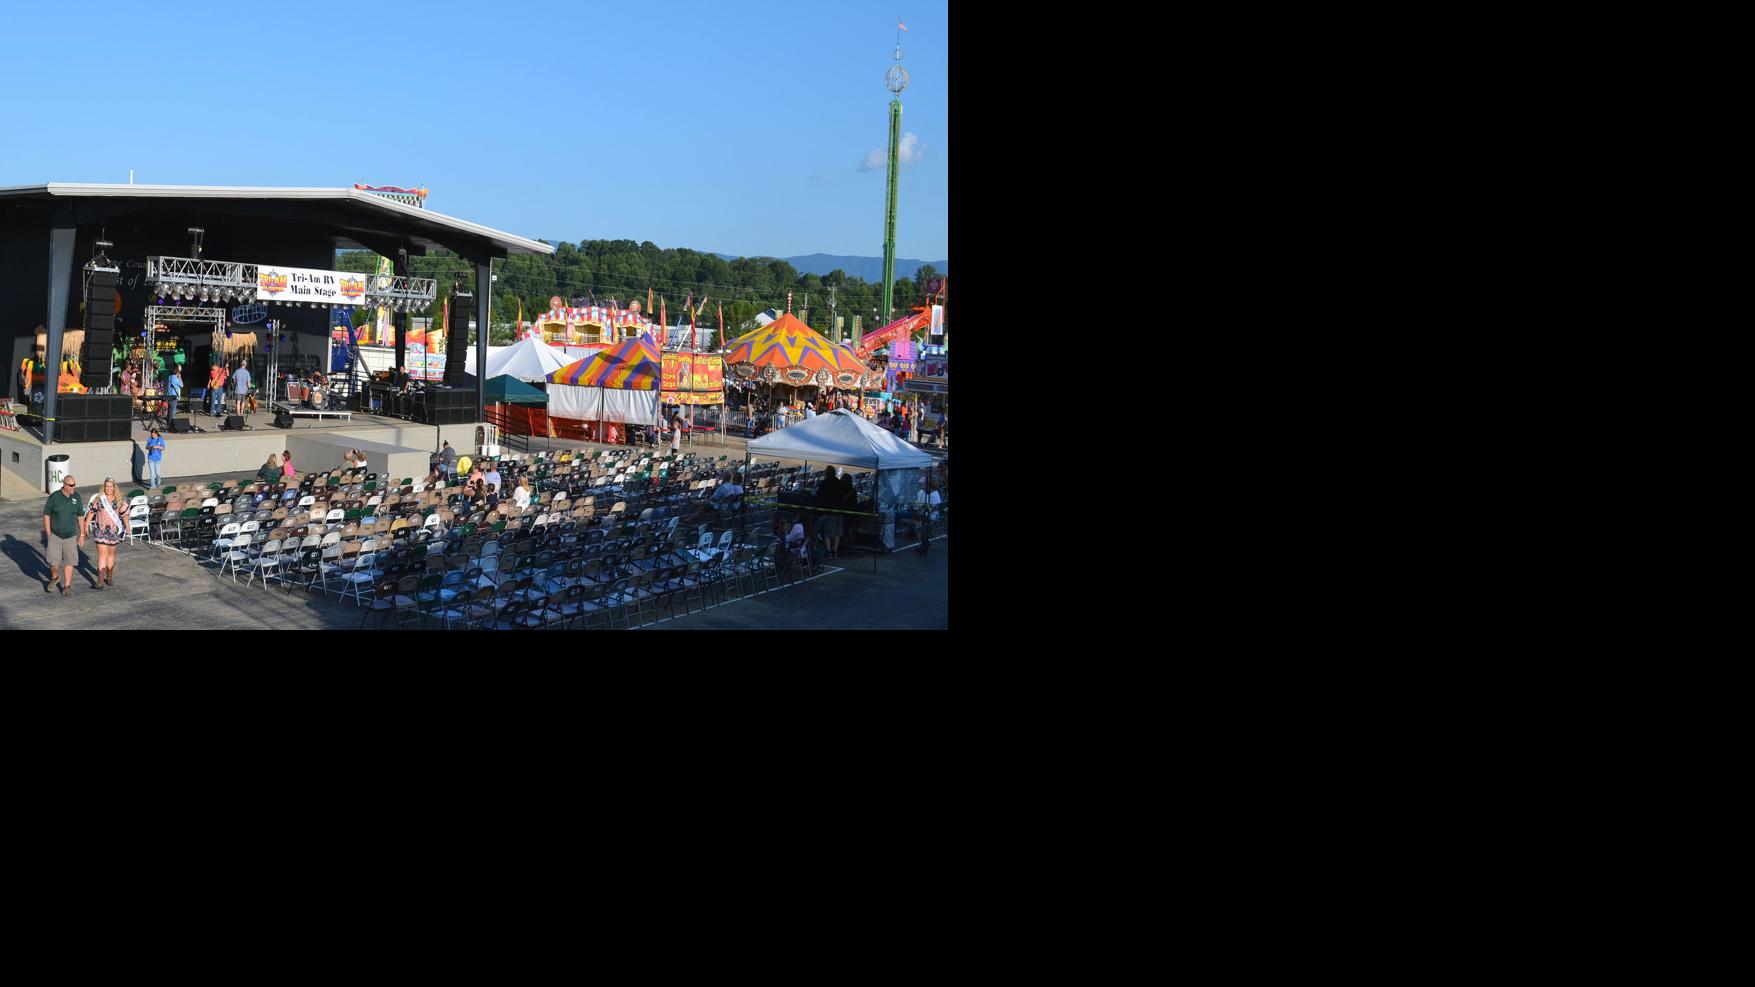 More Scenes From The Greene County Fair Local News greenevillesun com